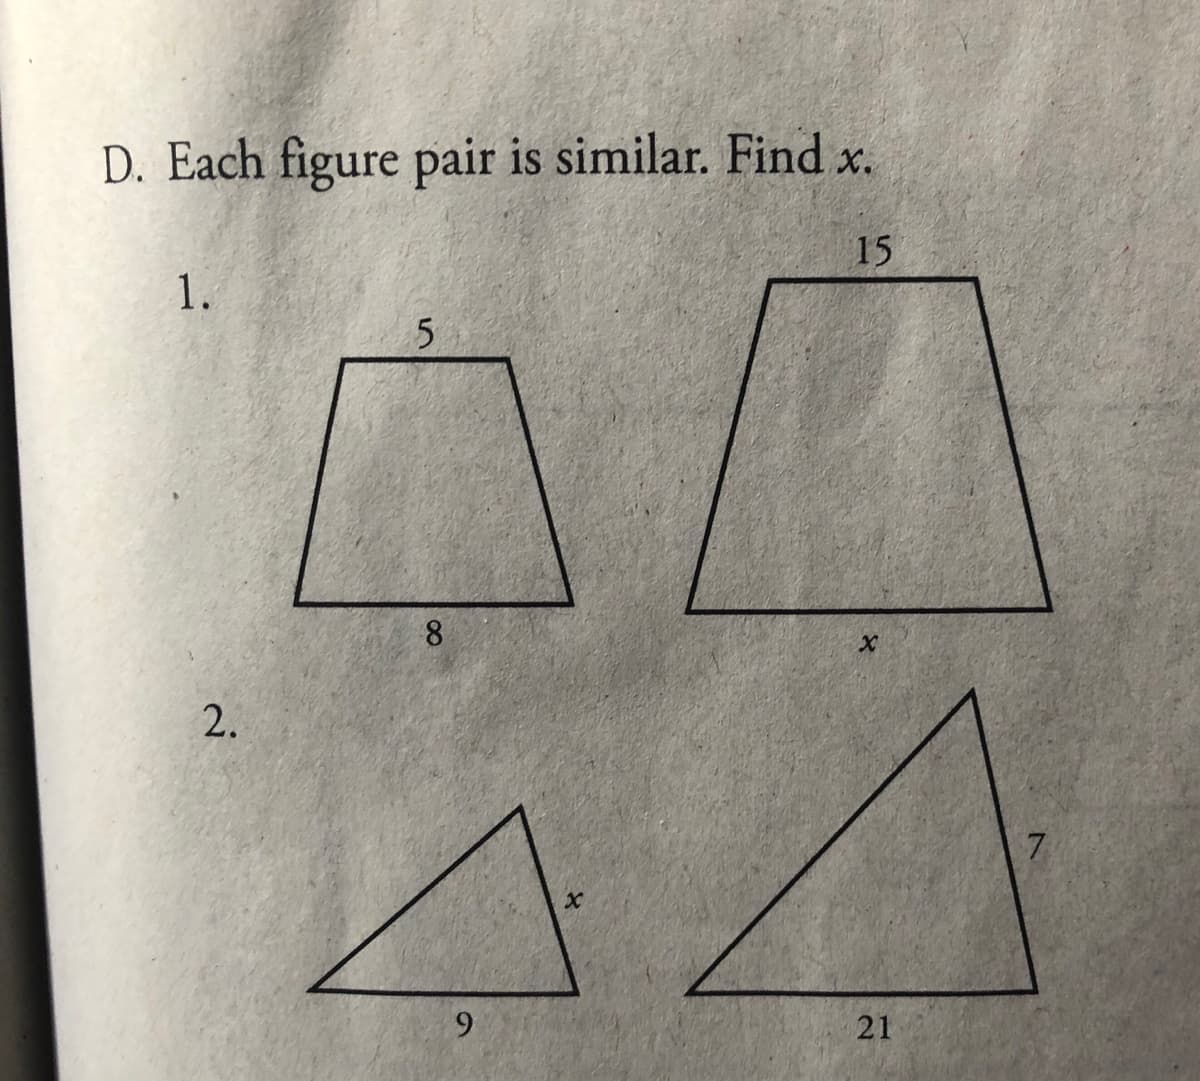 D. Each figure pair is similar. Find x.
15
1.
5
8
x
2.
9
x
21
7